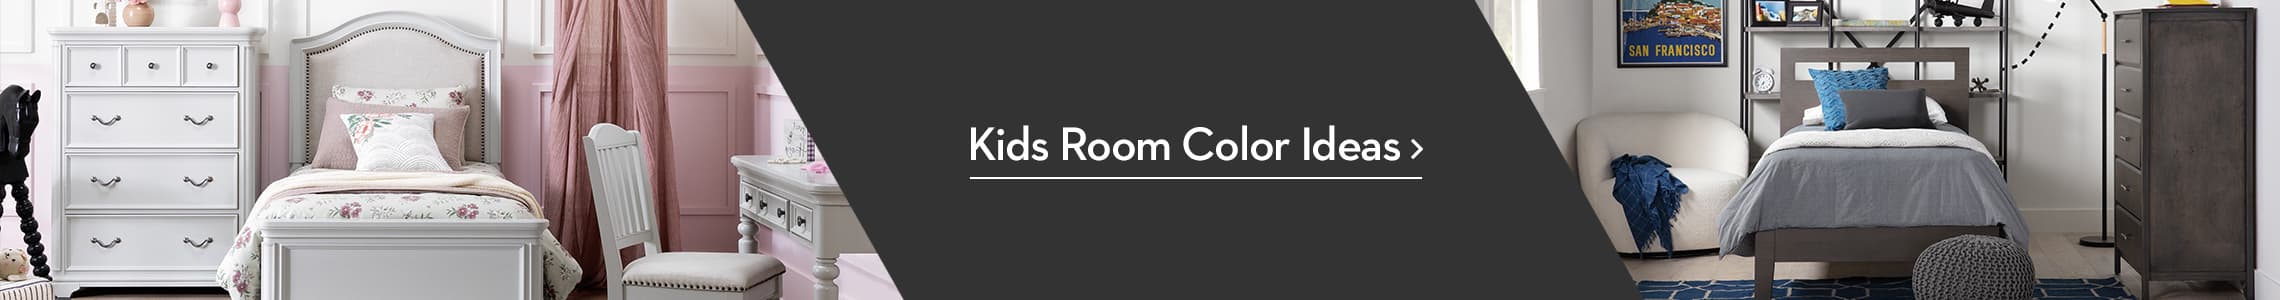 Kids Room Color ideas